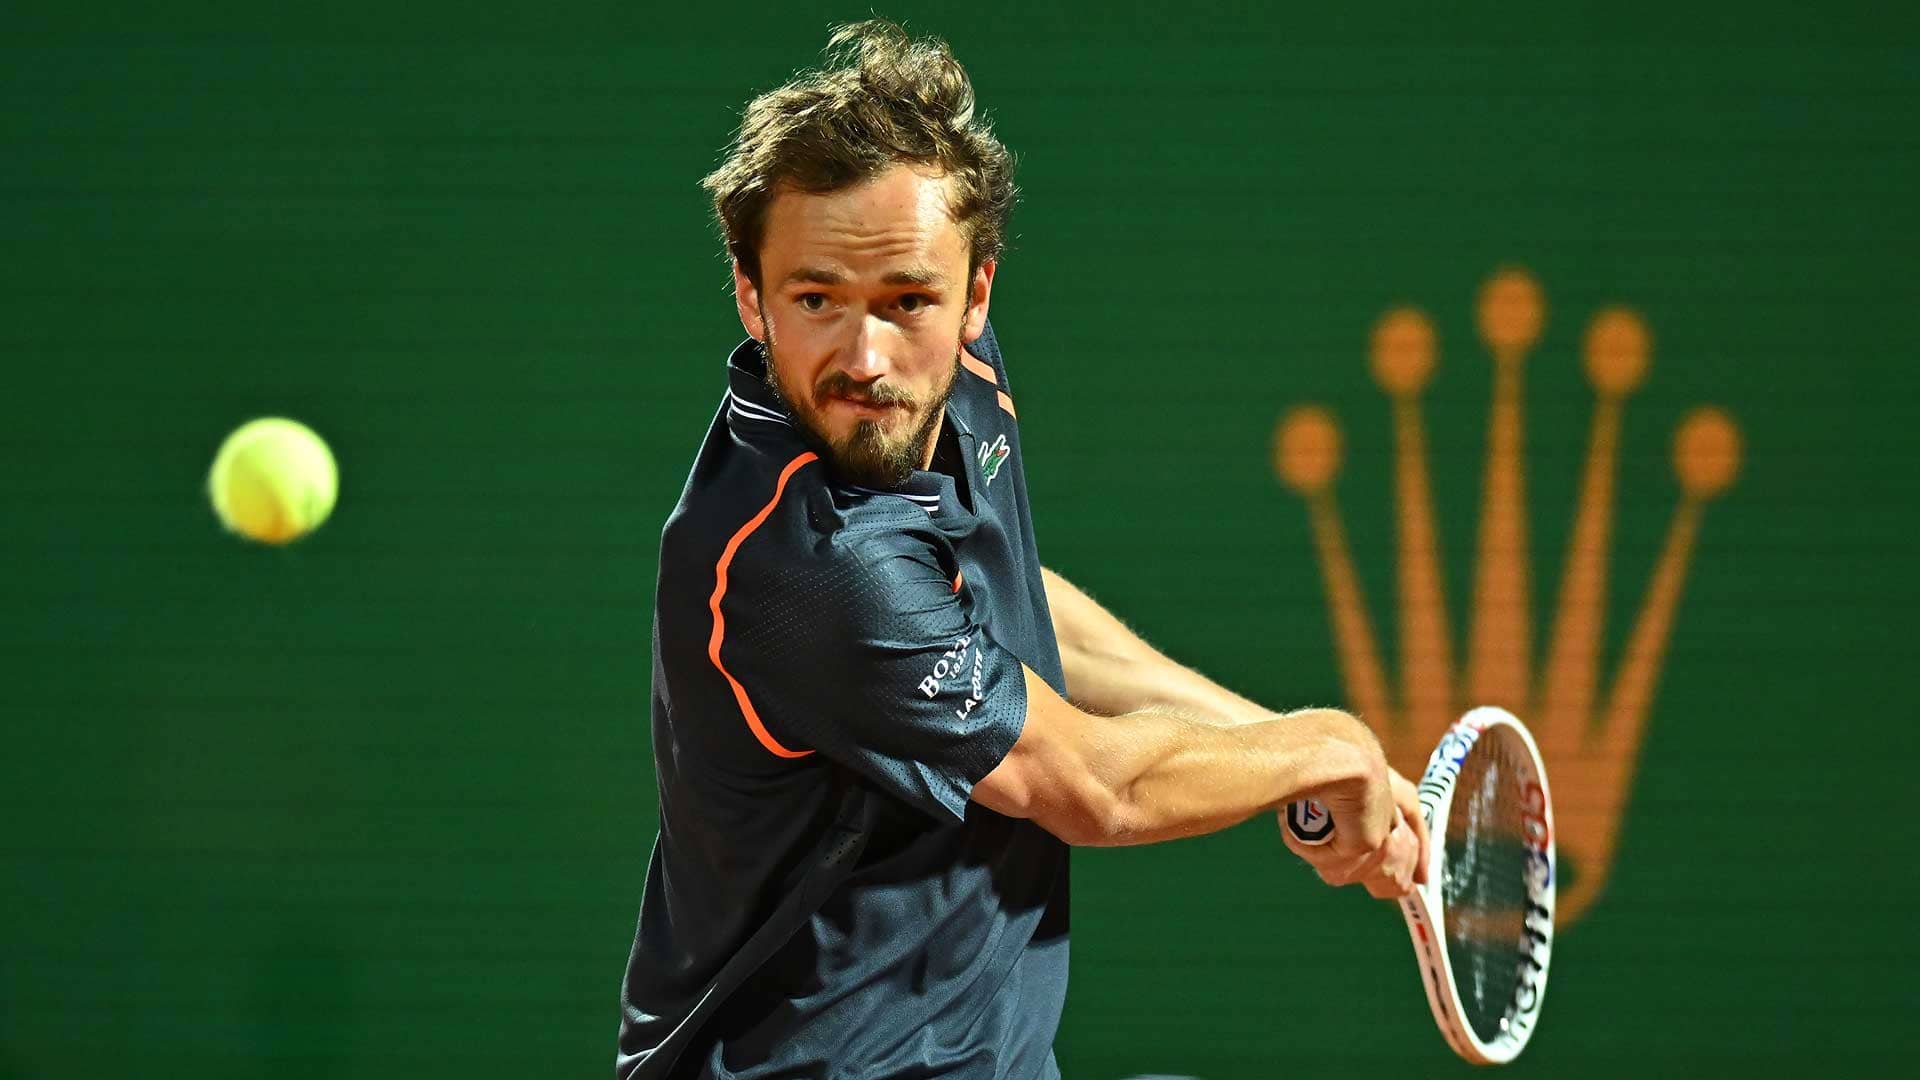 Medvedev Saves 2 MPs, Beats Zverev In Monte-Carlo ATP Tour Tennis